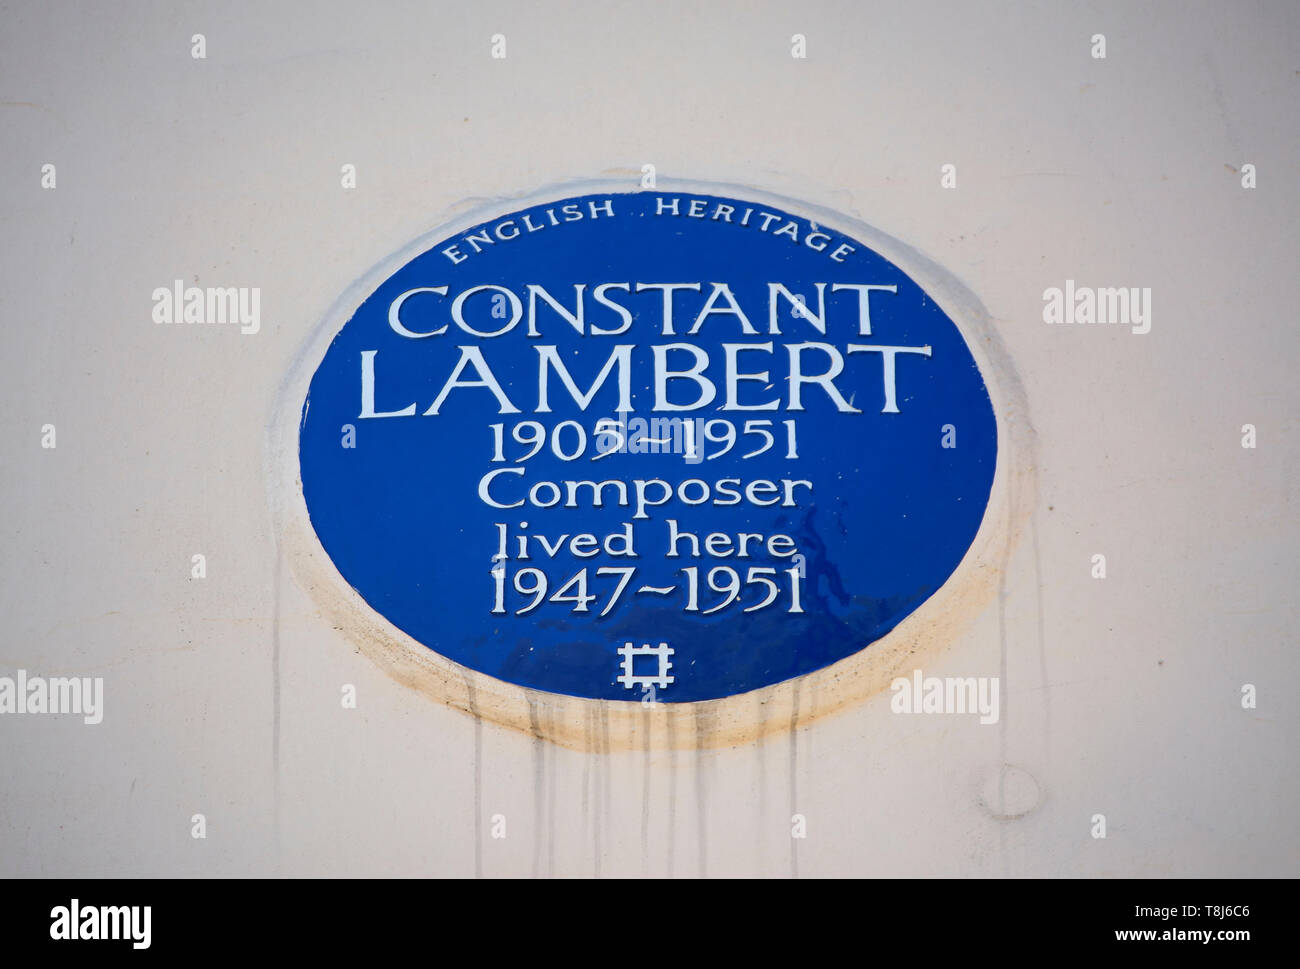 English Heritage placa azul marcando un hogar del compositor constante lambert, Camden, Londres, Inglaterra Foto de stock